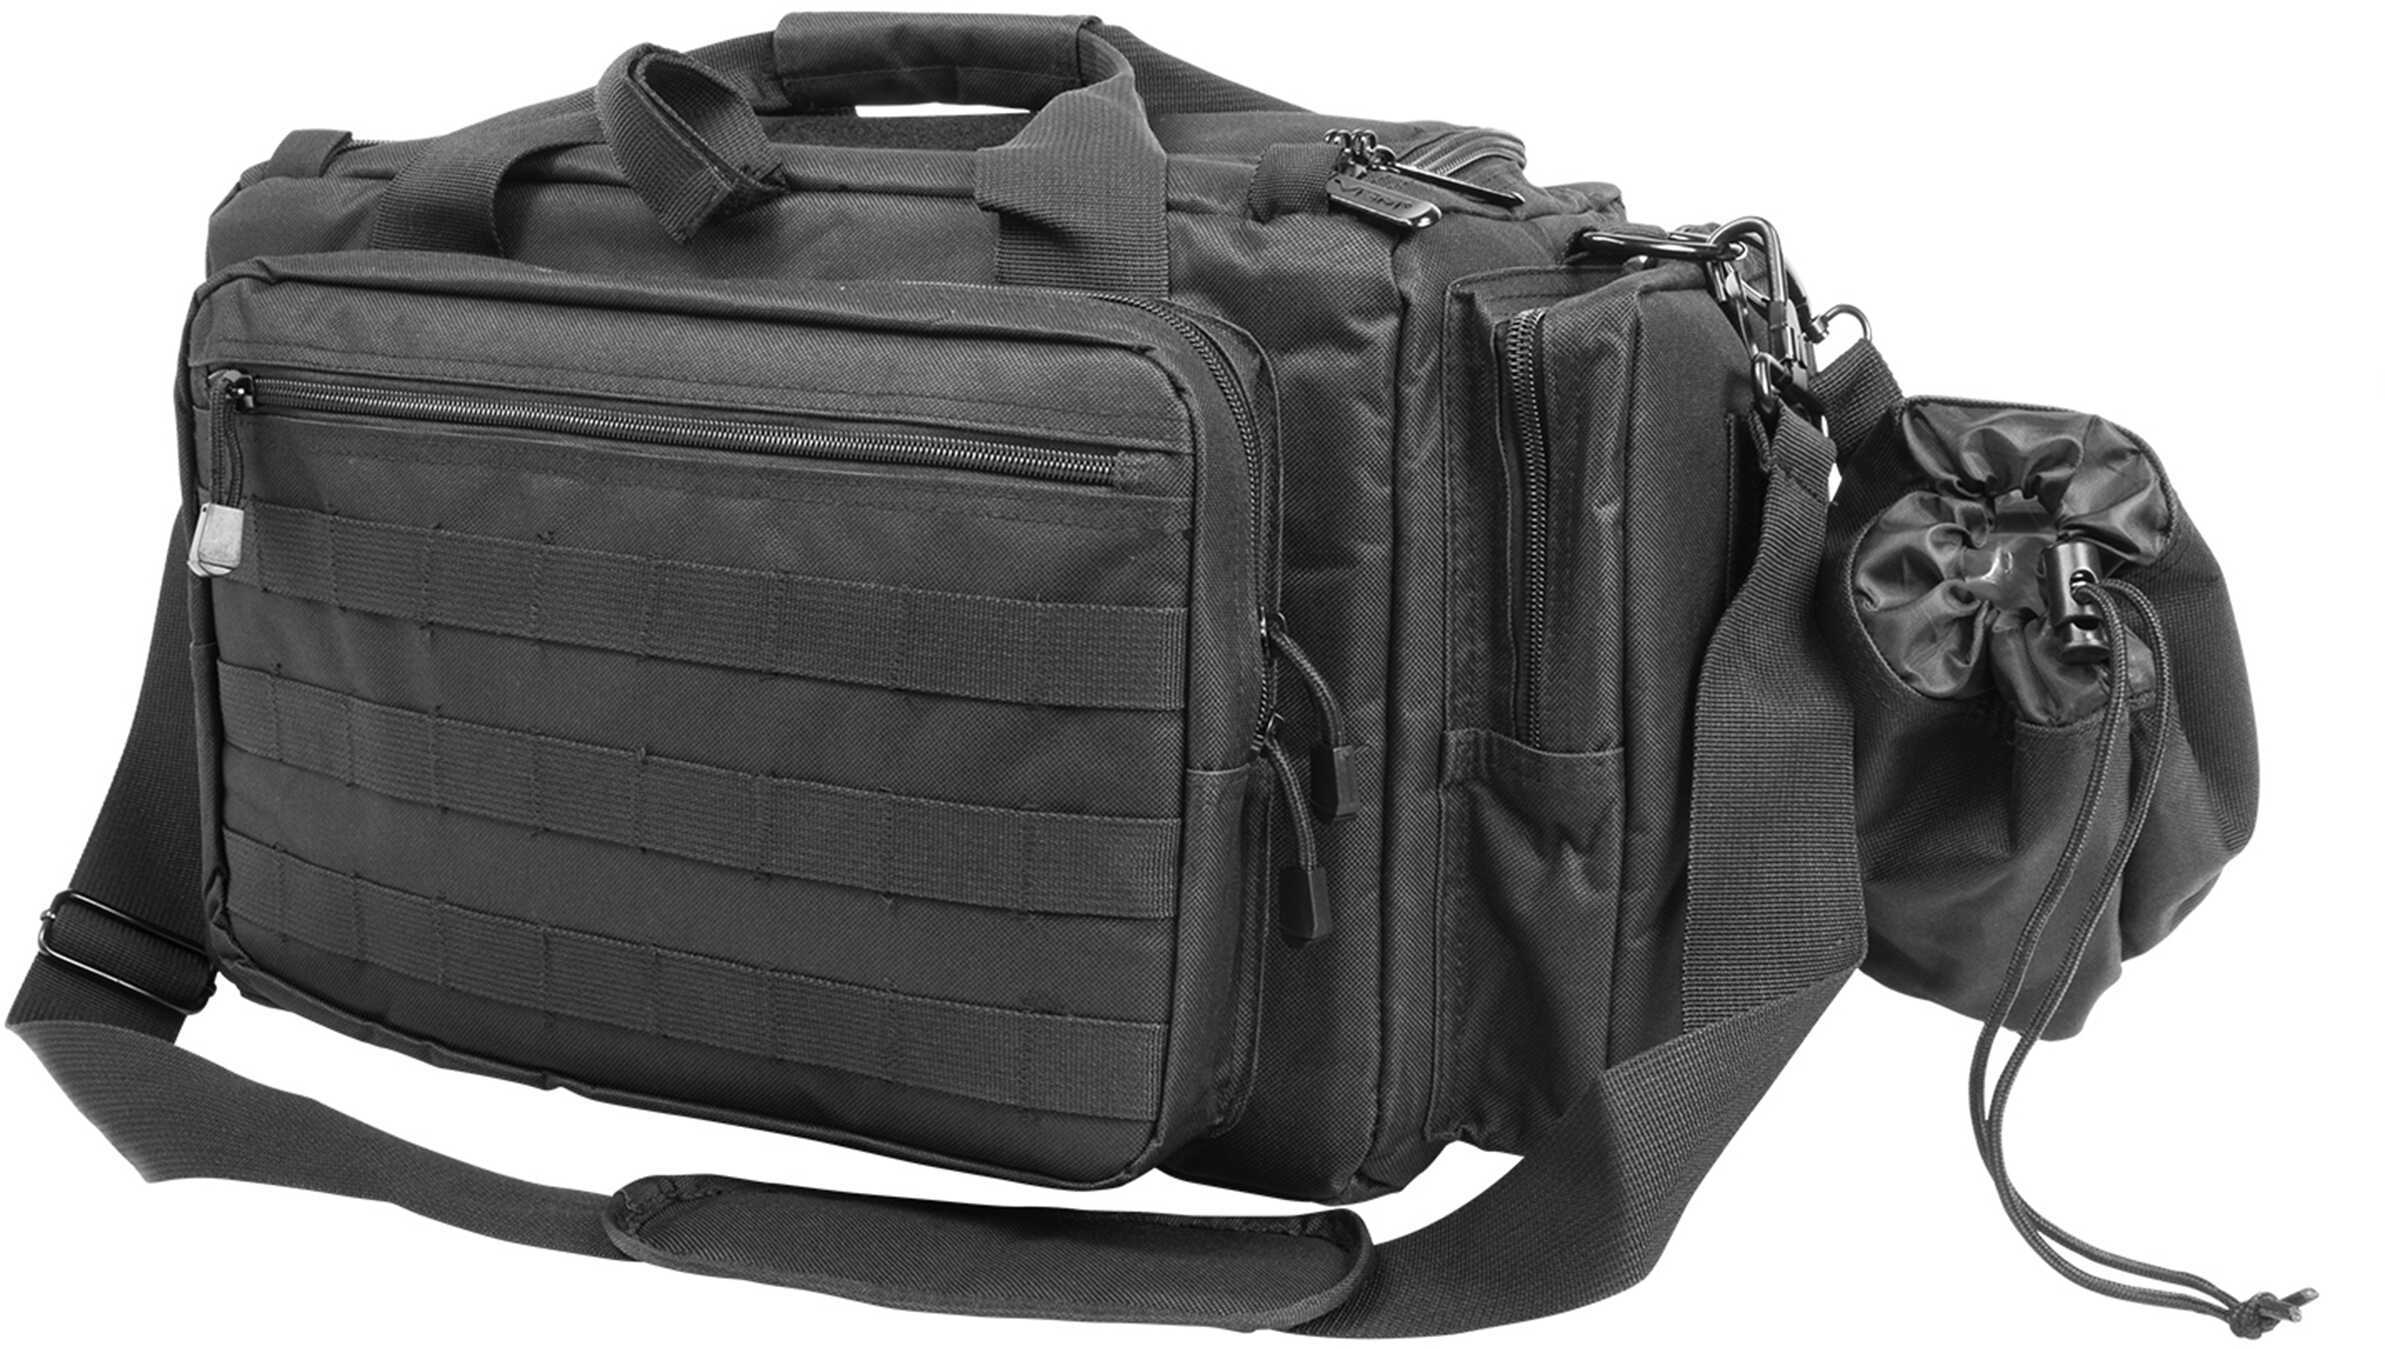 NCStar CVCRB2950B Competition Range Bag Black